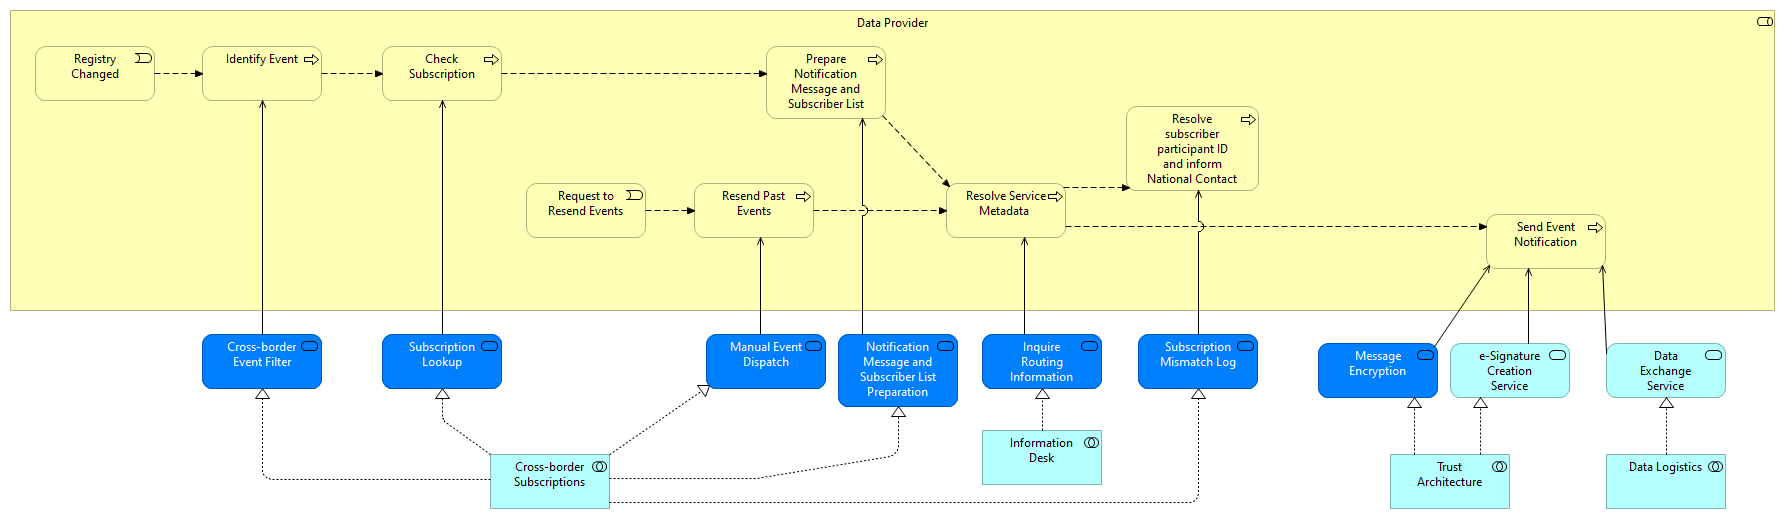 Notification Process Realization of the Data Provider